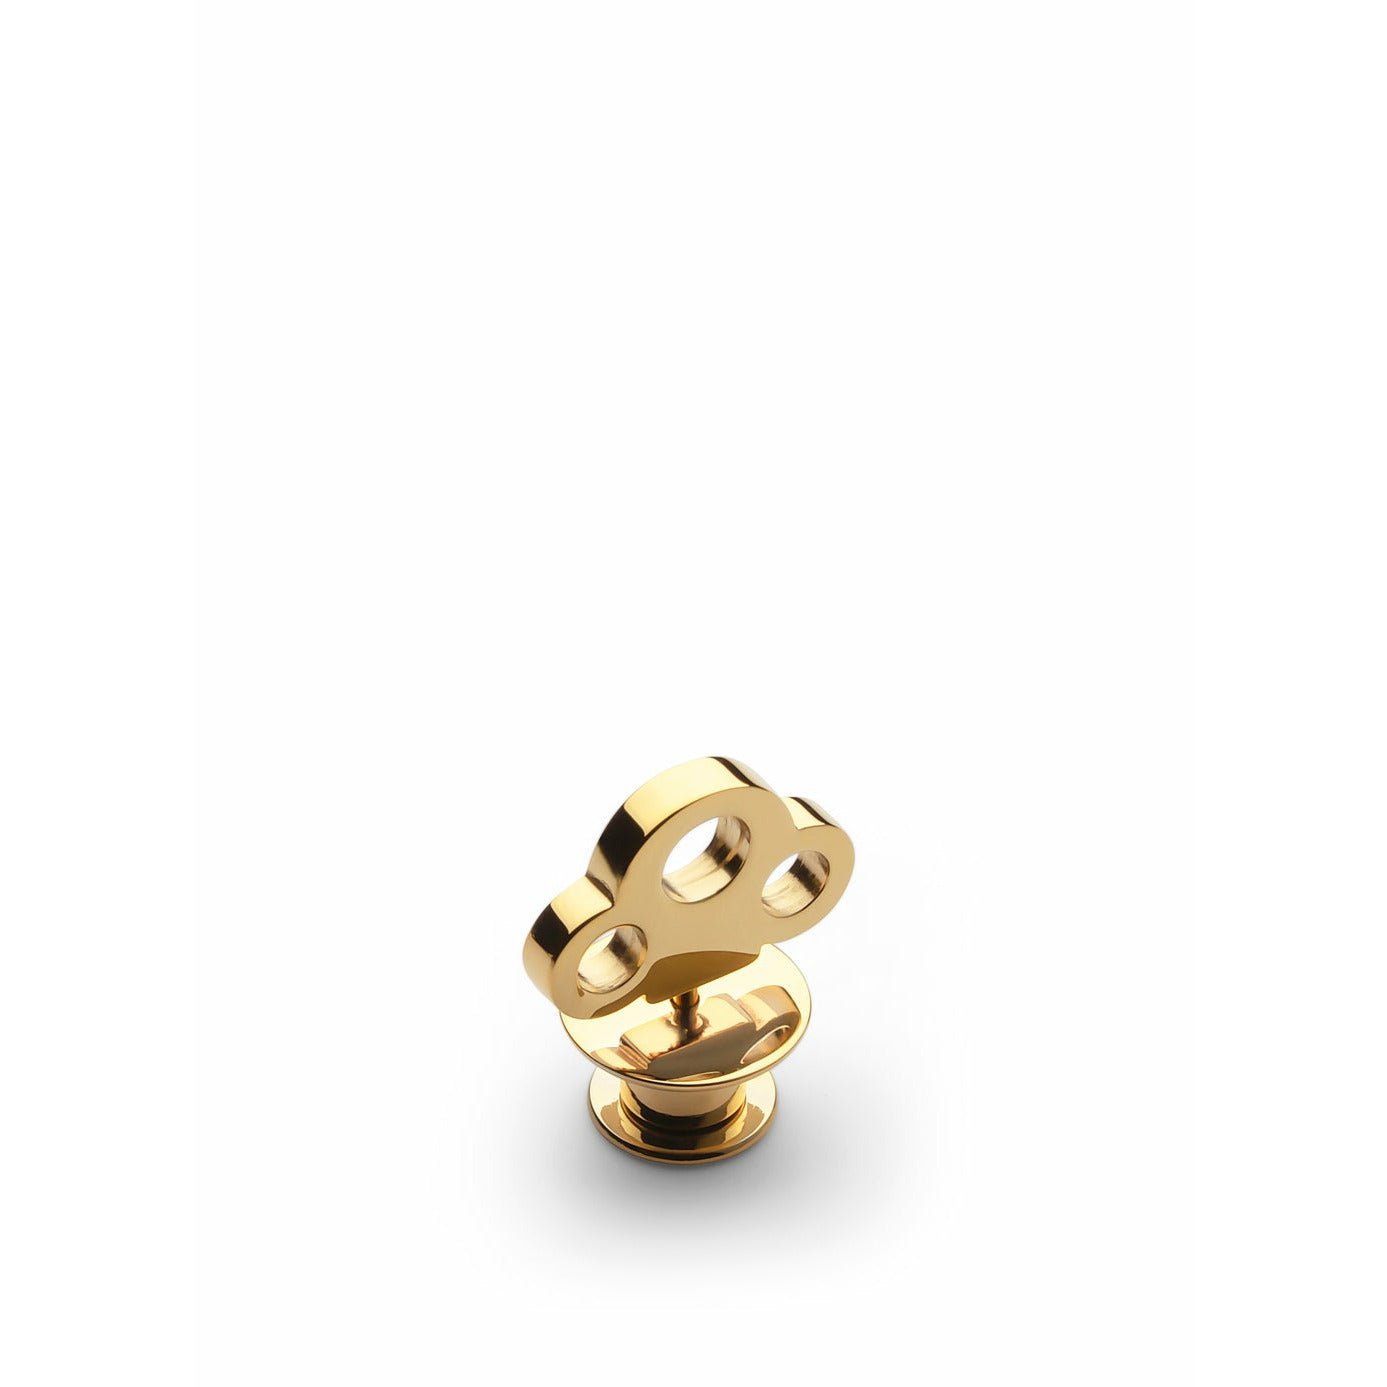 Skultuna The Key Pin Cufflink, Gold Plated